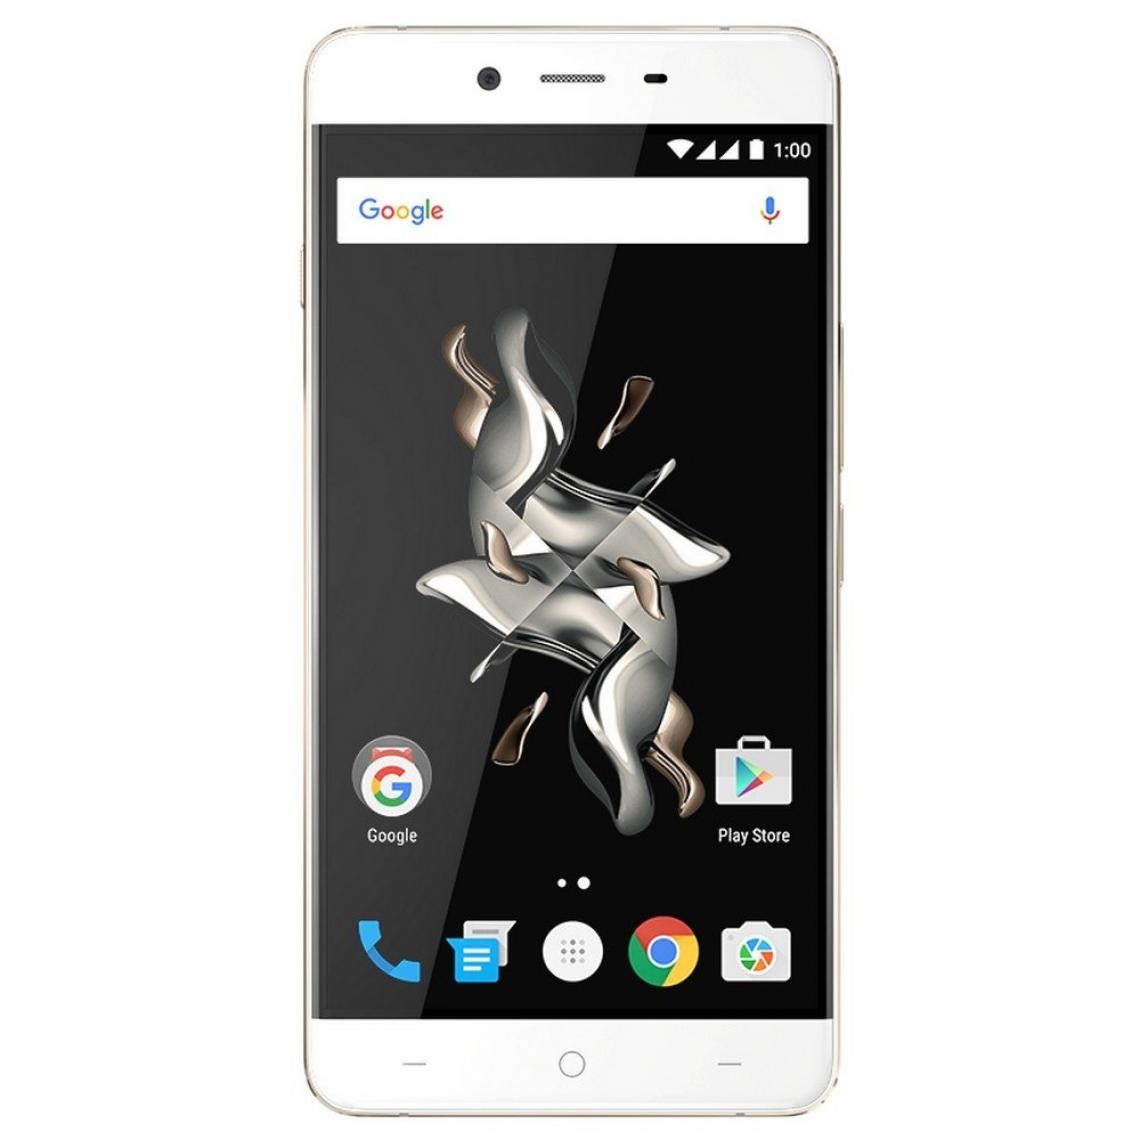 Huawei - ONEPLUS X 16GB (White) E1003 - Smartphone Android